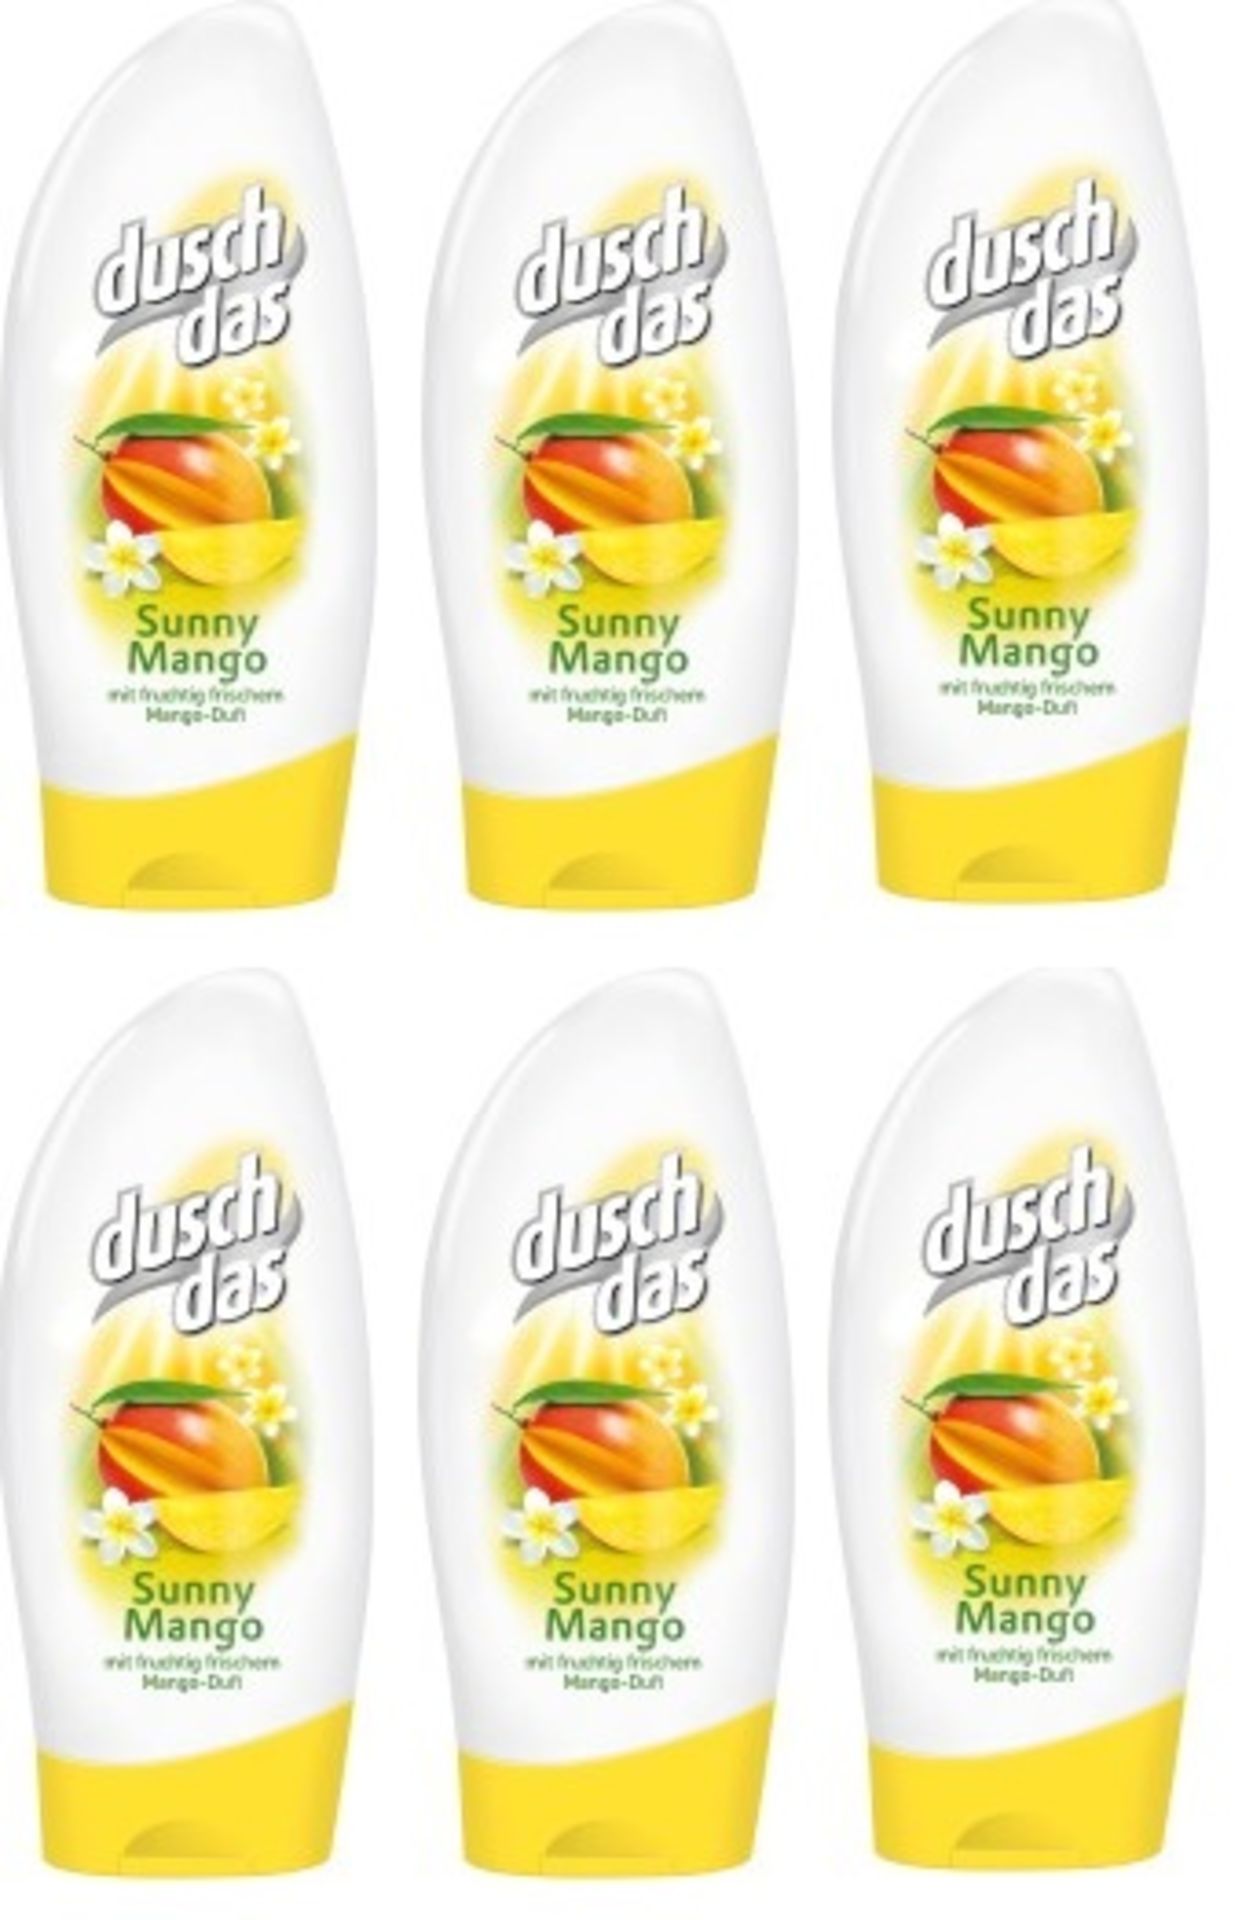 + VAT Brand New Lot Of 6 Dusch Das Sunny Mango Shower Gel 250 ml Total eBay Price Â£20.46 (Note